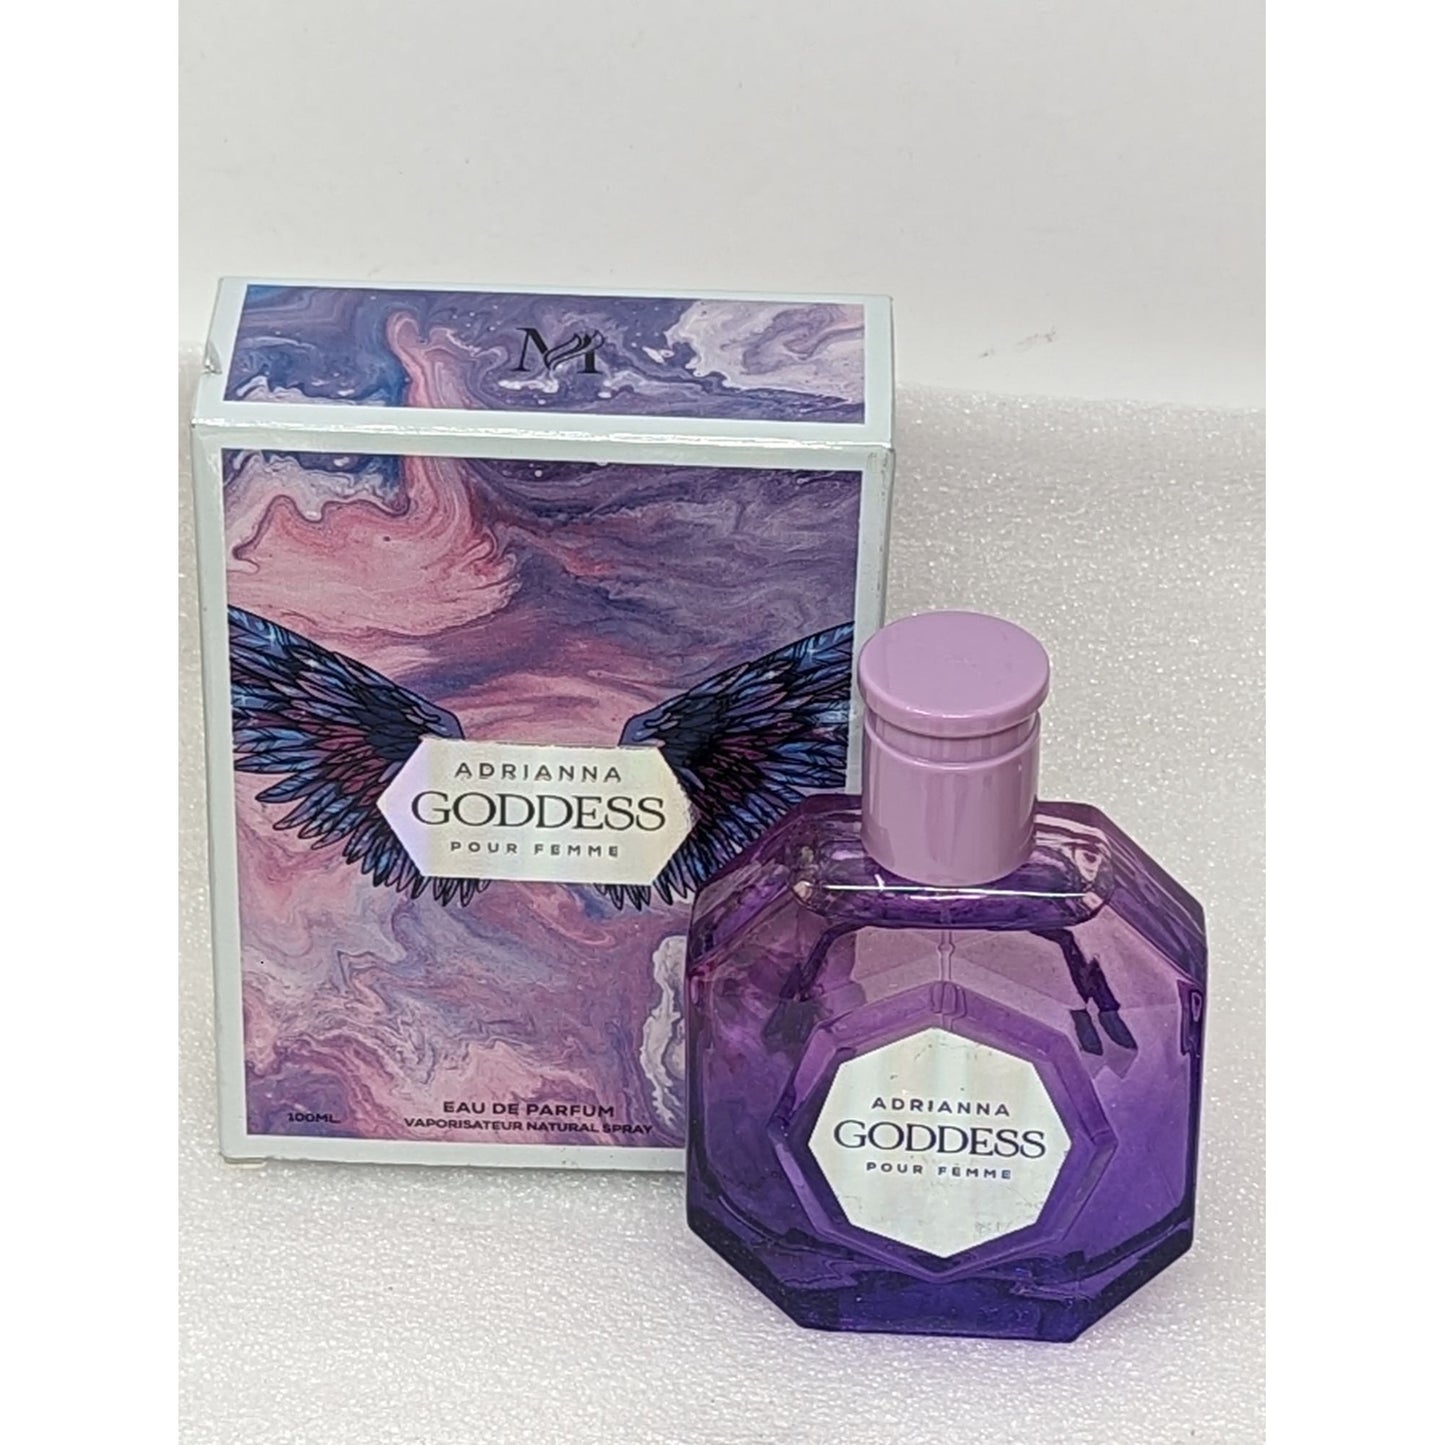 Mirage Brands Adrianna Goddess Pour Femme Women's Perfume 3.4 Oz